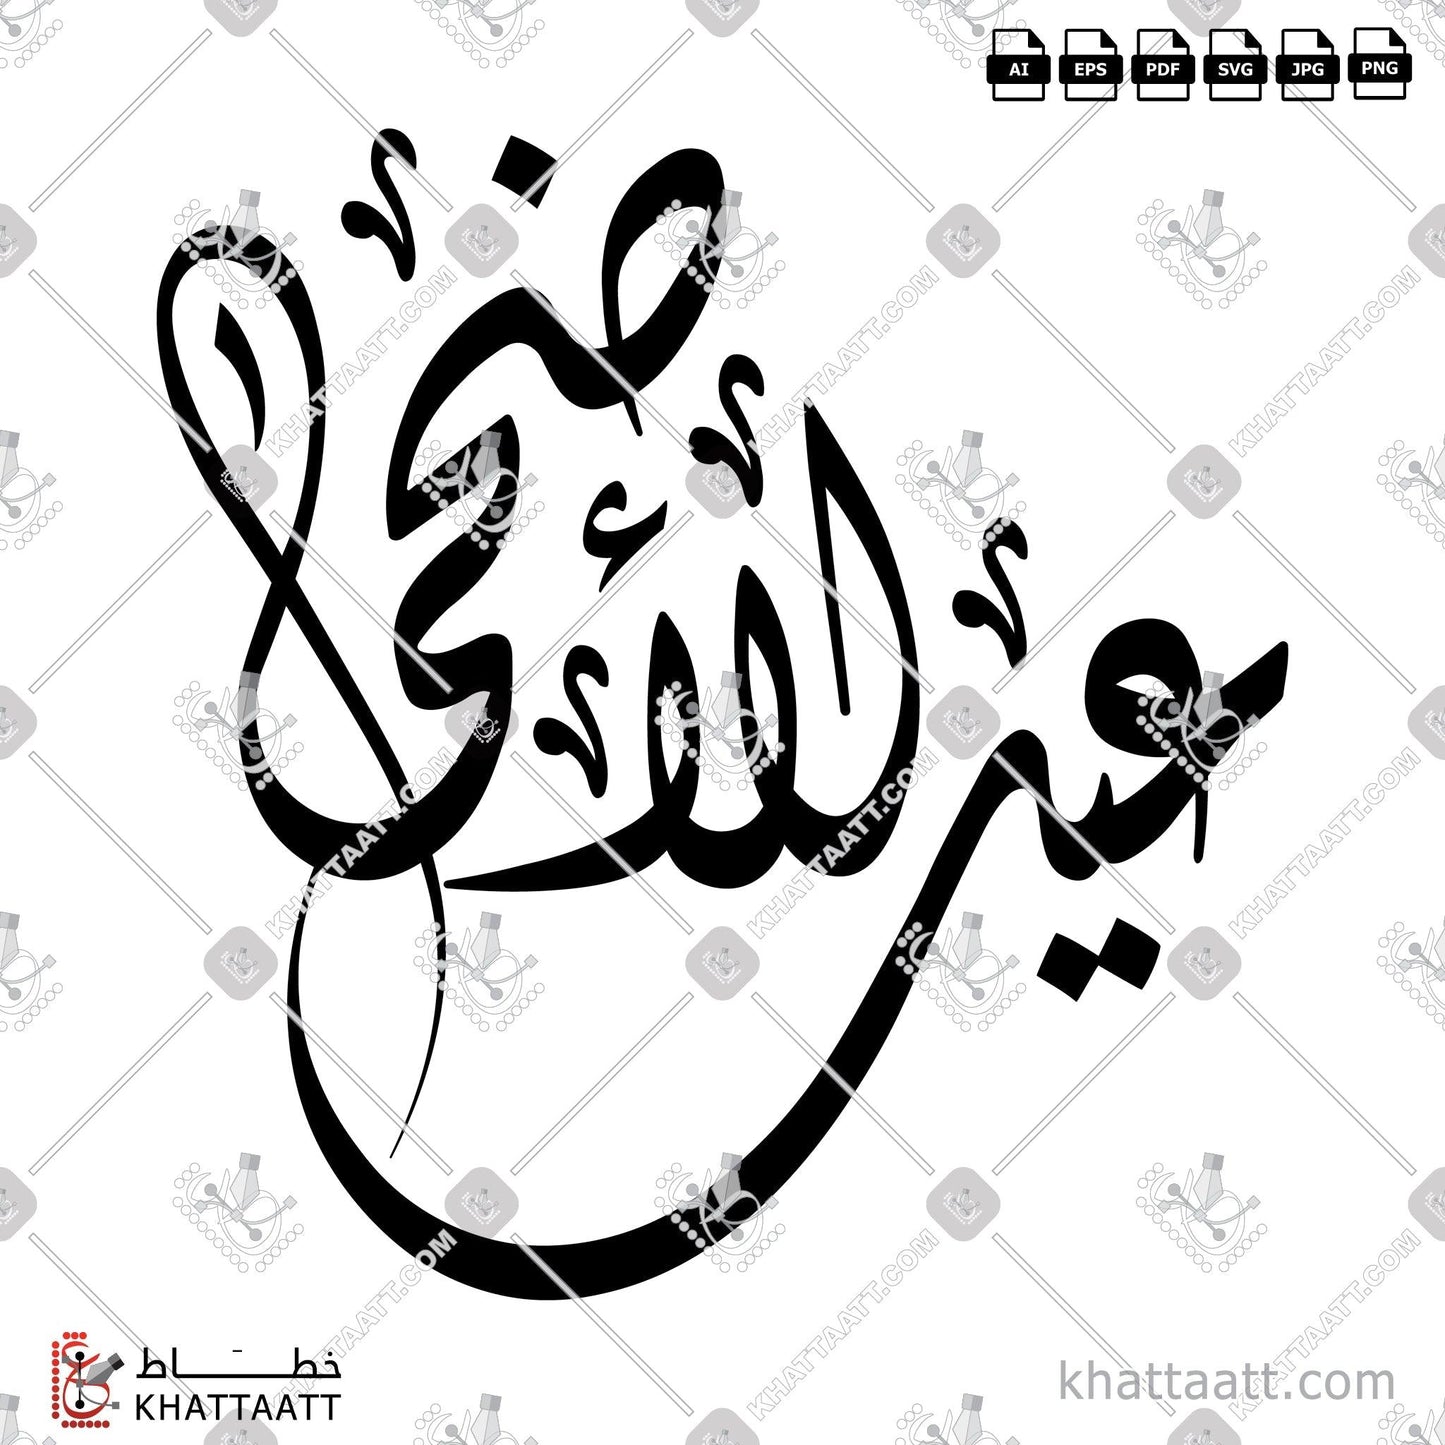 Download Arabic Calligraphy of Eid Al-Adha - عيد الأضحى in Diwani - الخط الديواني in vector and .png